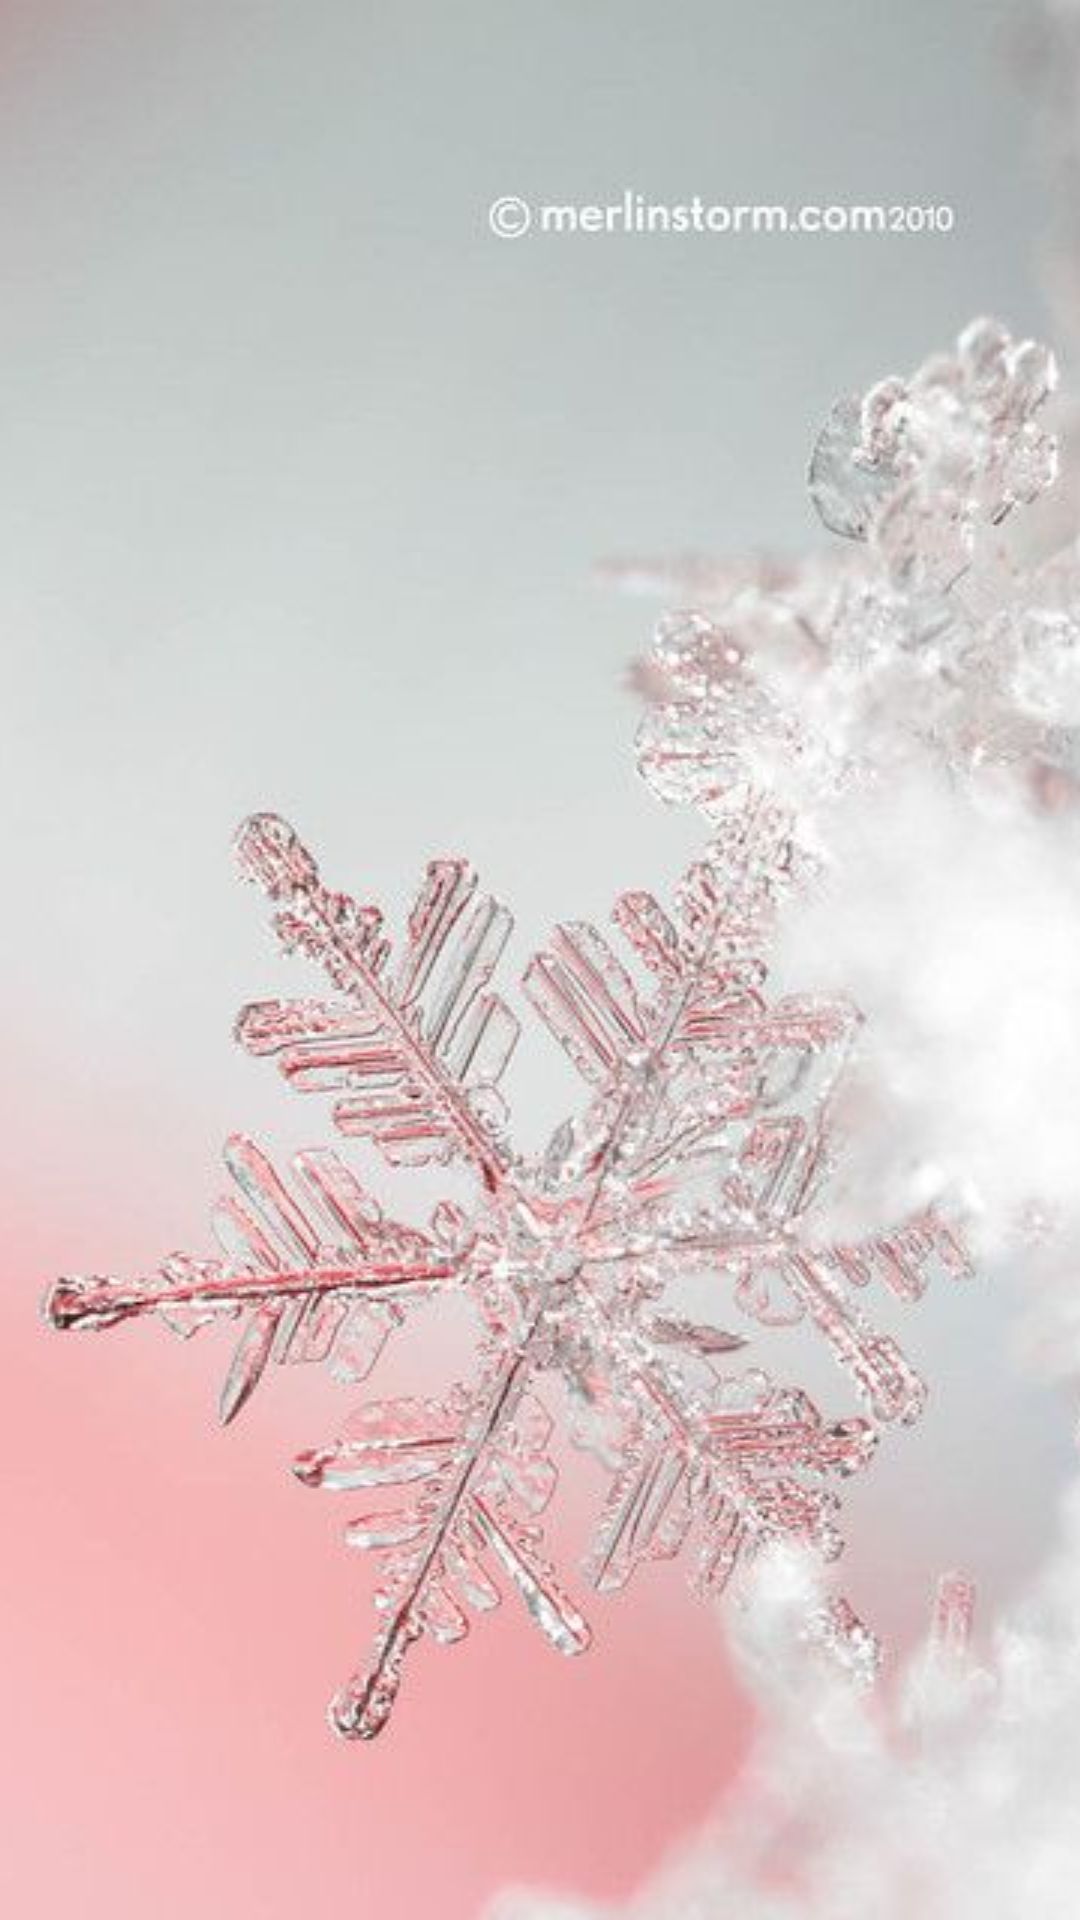 Snowflake Wallpaper Snowflake Background Download